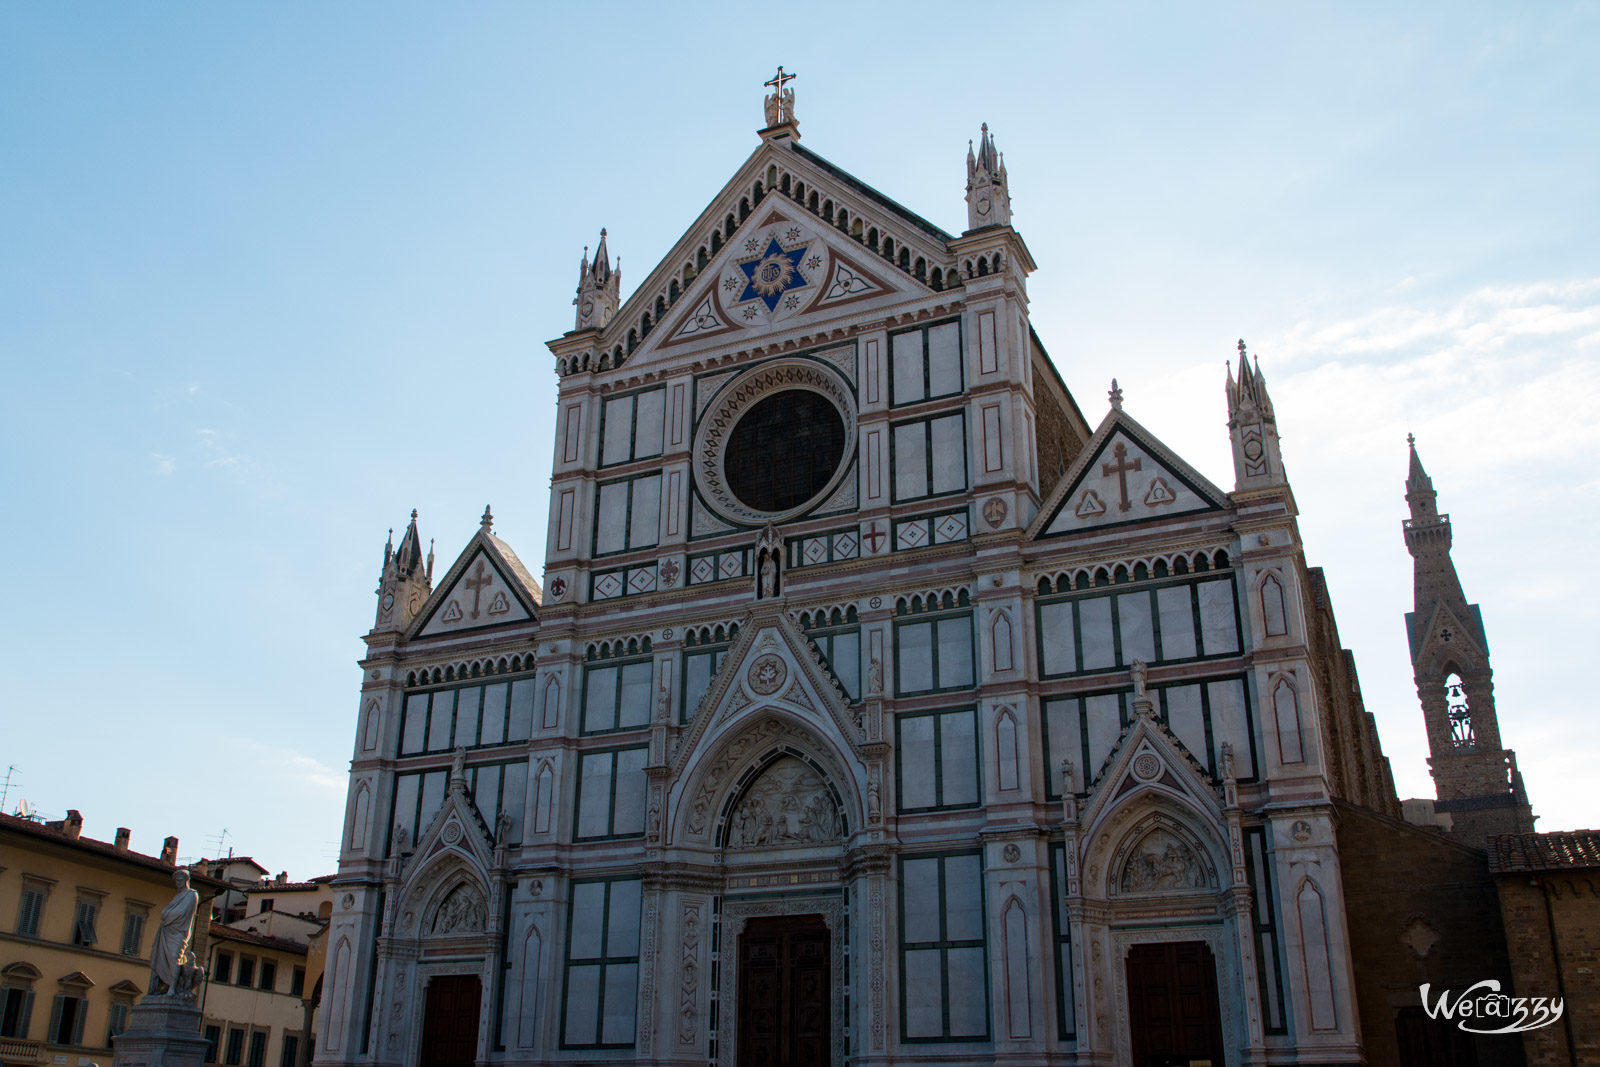 Florence, Italie, Toscane, Voyage